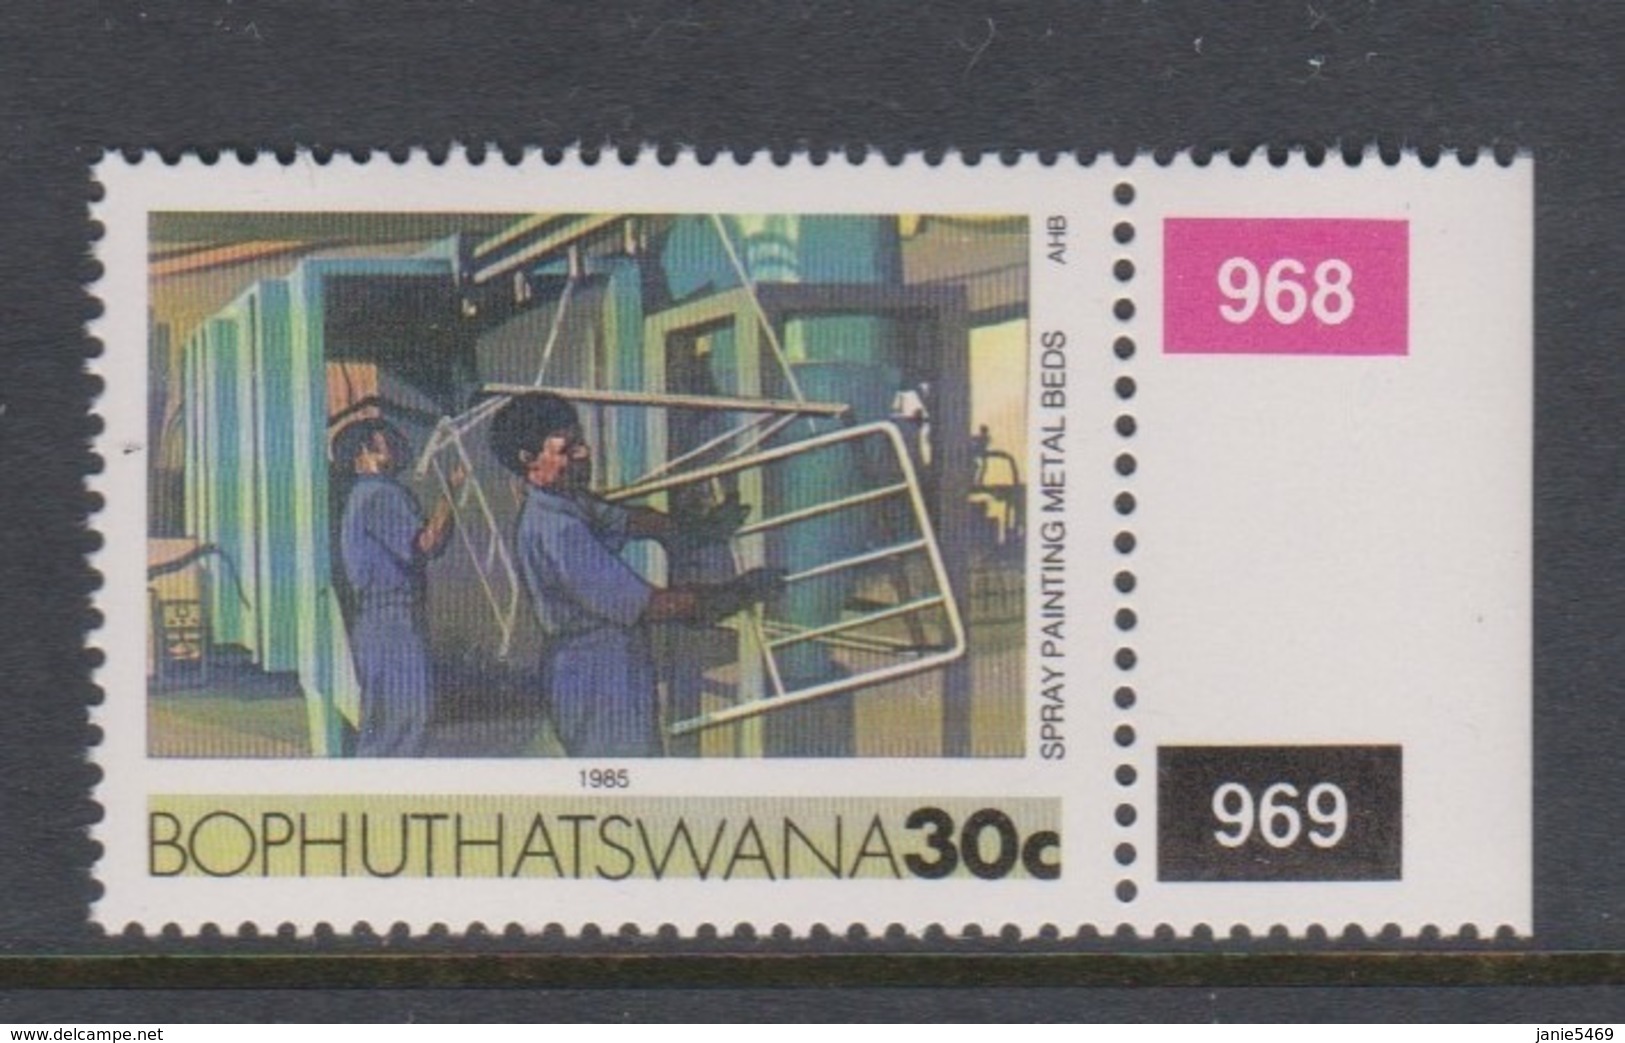 South Africa-Bophuthatswana SG R140 1989 Industries,30c Spray Painting,reprint ,Mint Never Hinged - Bophuthatswana